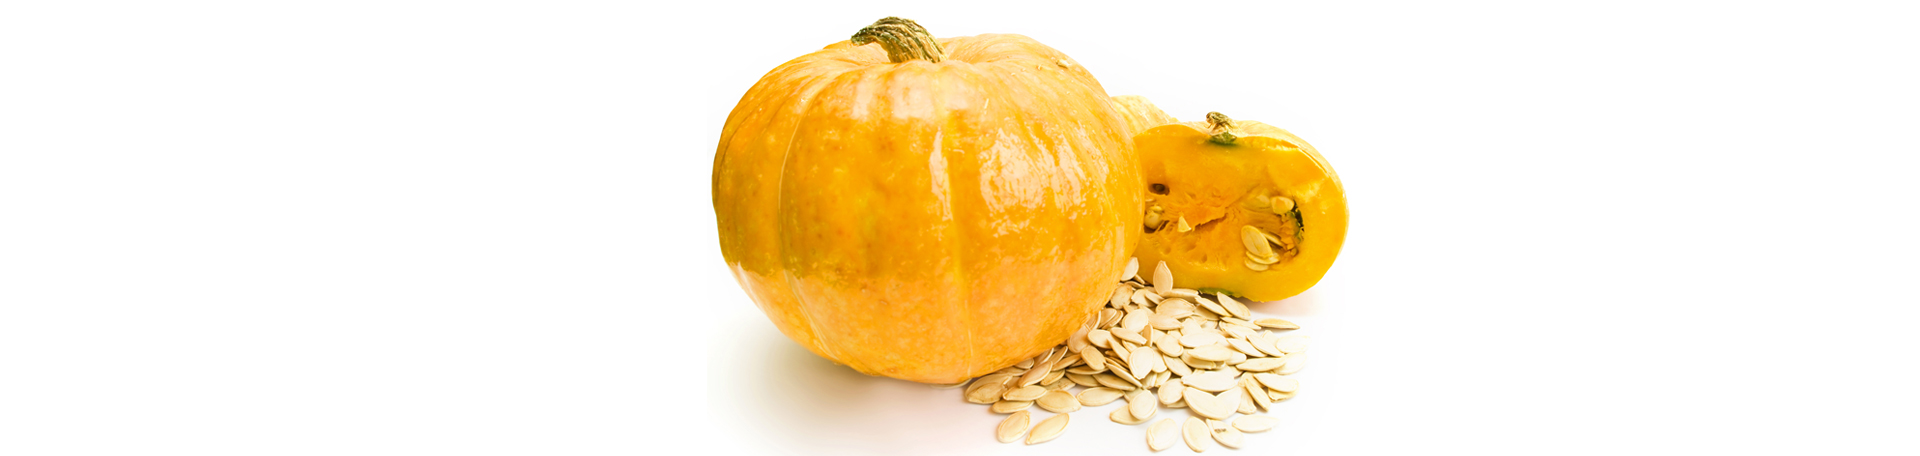 Richmond chiropractic nutrition info on the pumpkin